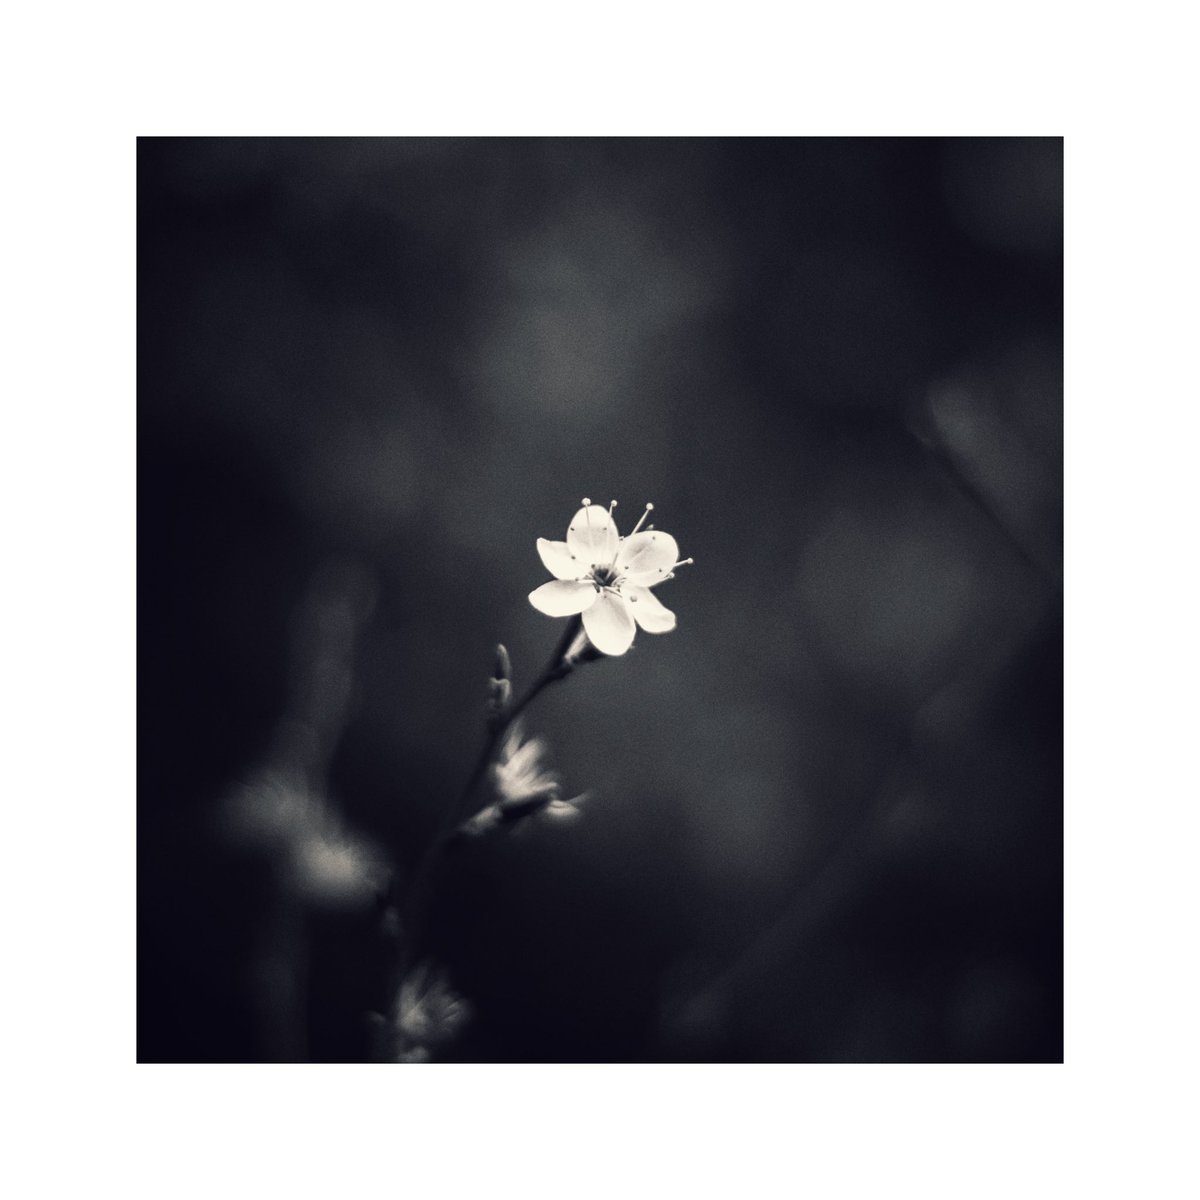 Single Blossom, Oxfordshire. 

#photography #monochrome #bnw